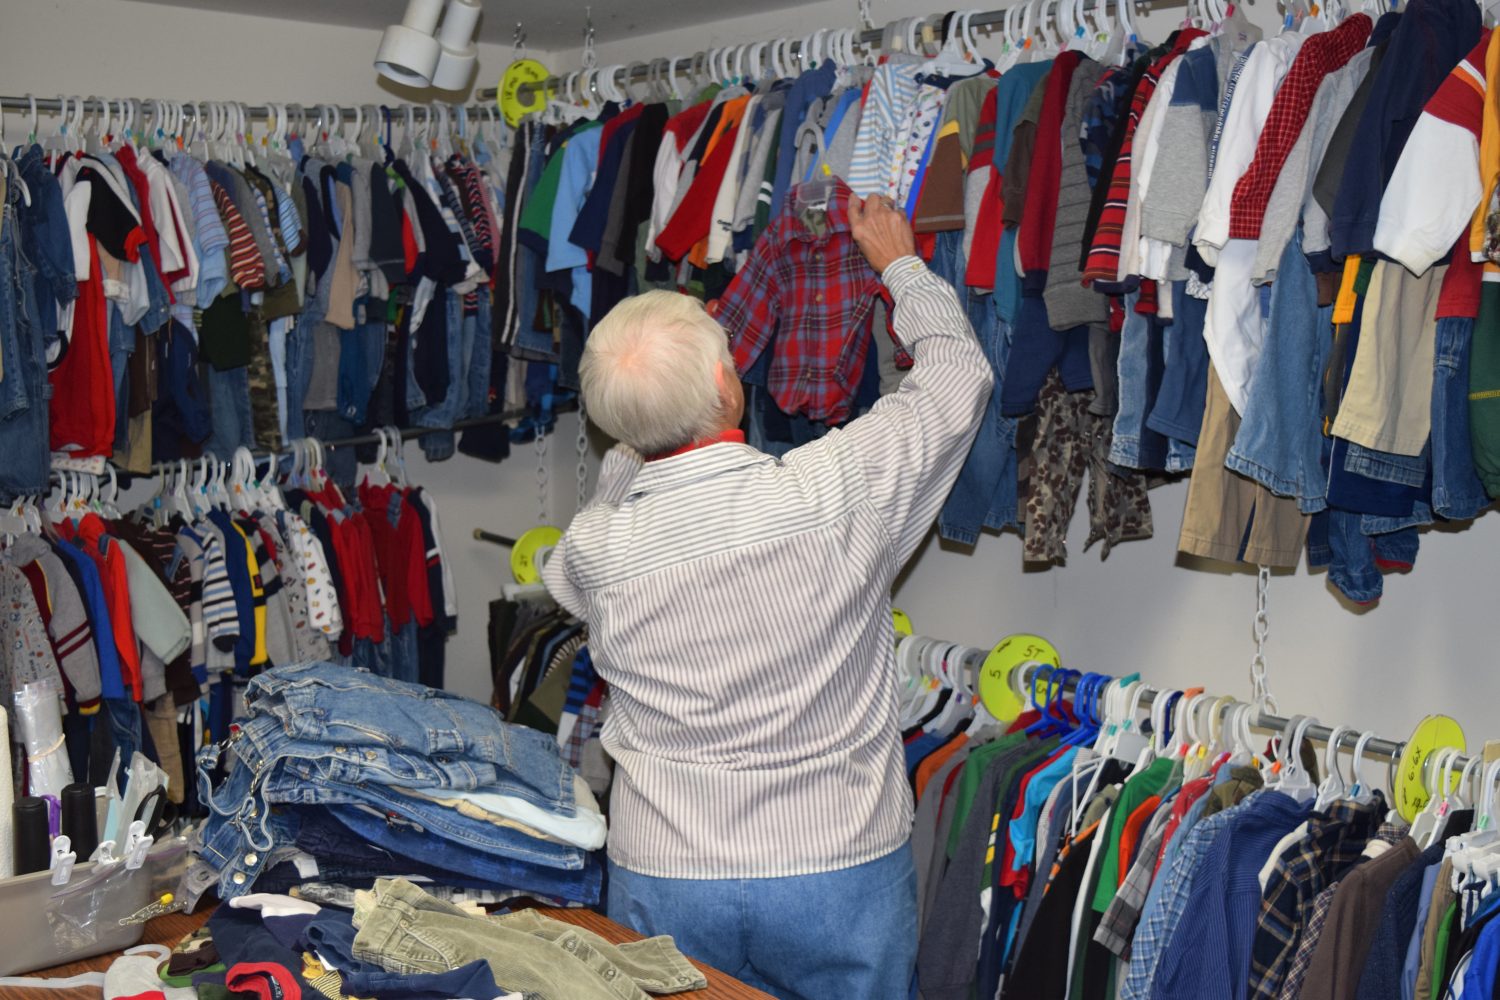 Volunteer Darlene Schmidt sorts through children's garments that are available at the Hannah Center to those in need.